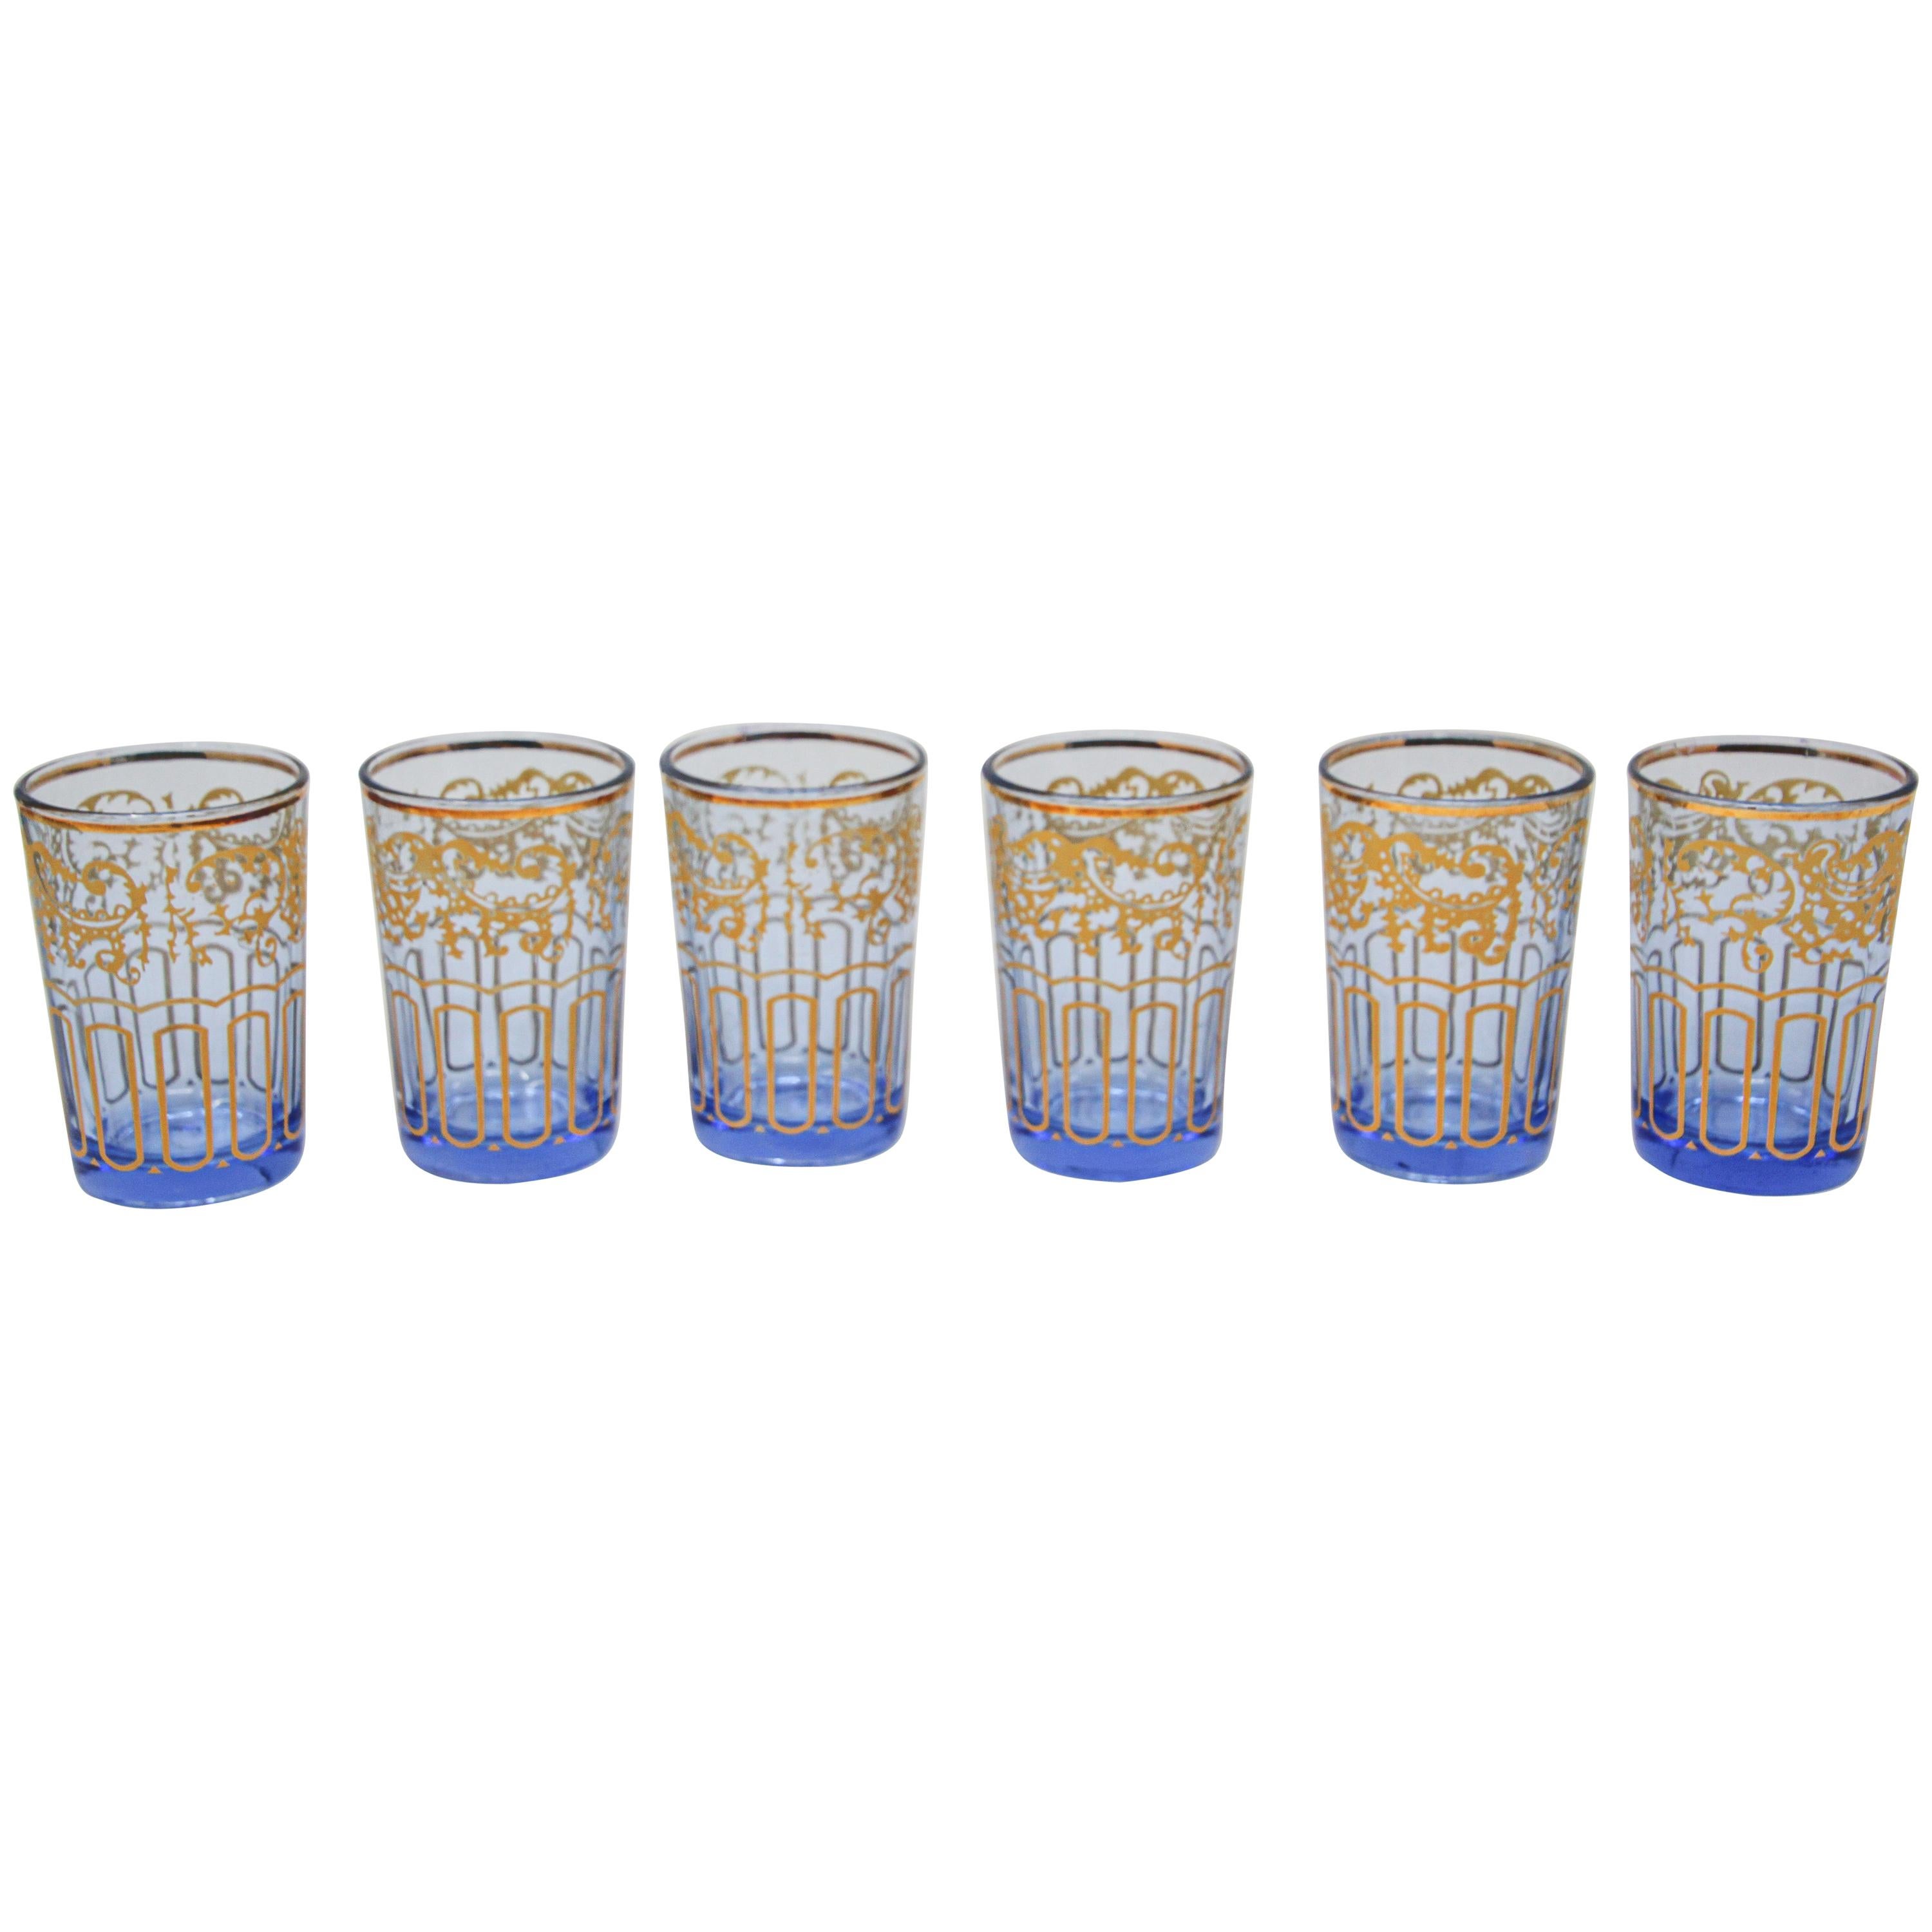 Set of Six Blue Glasses with Gold Moorish Design